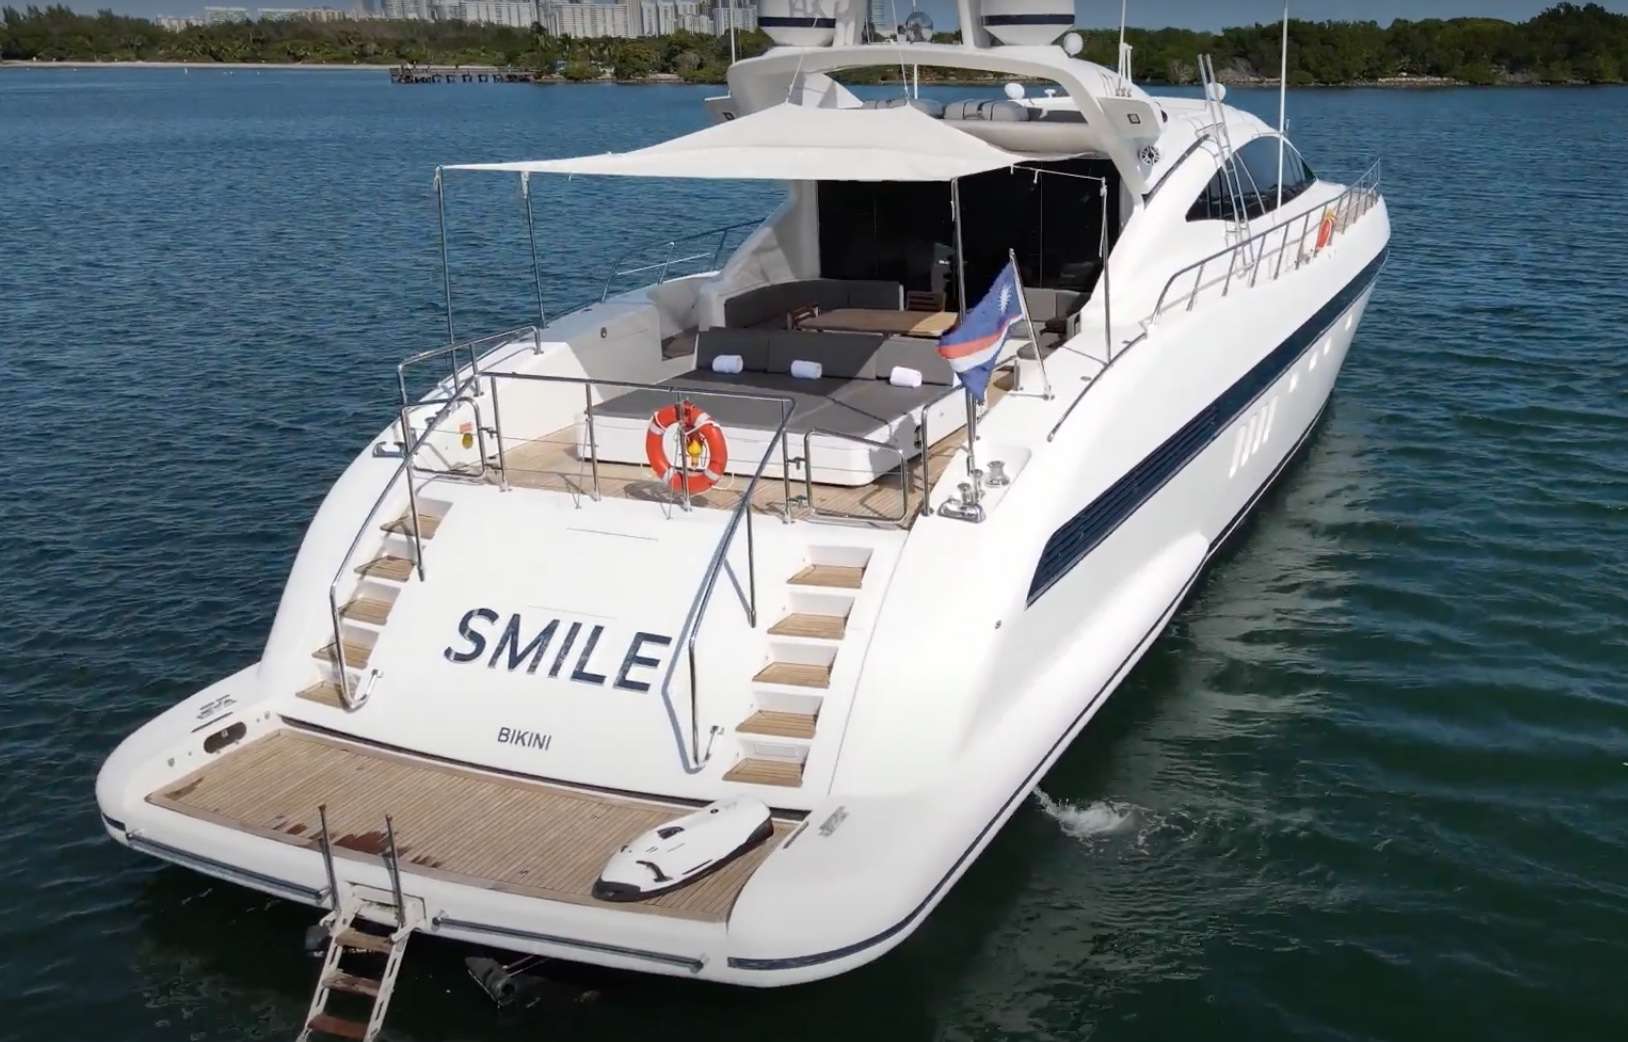 SMILE - Motor Boat Charter USA & Boat hire in Florida & Bahamas 3